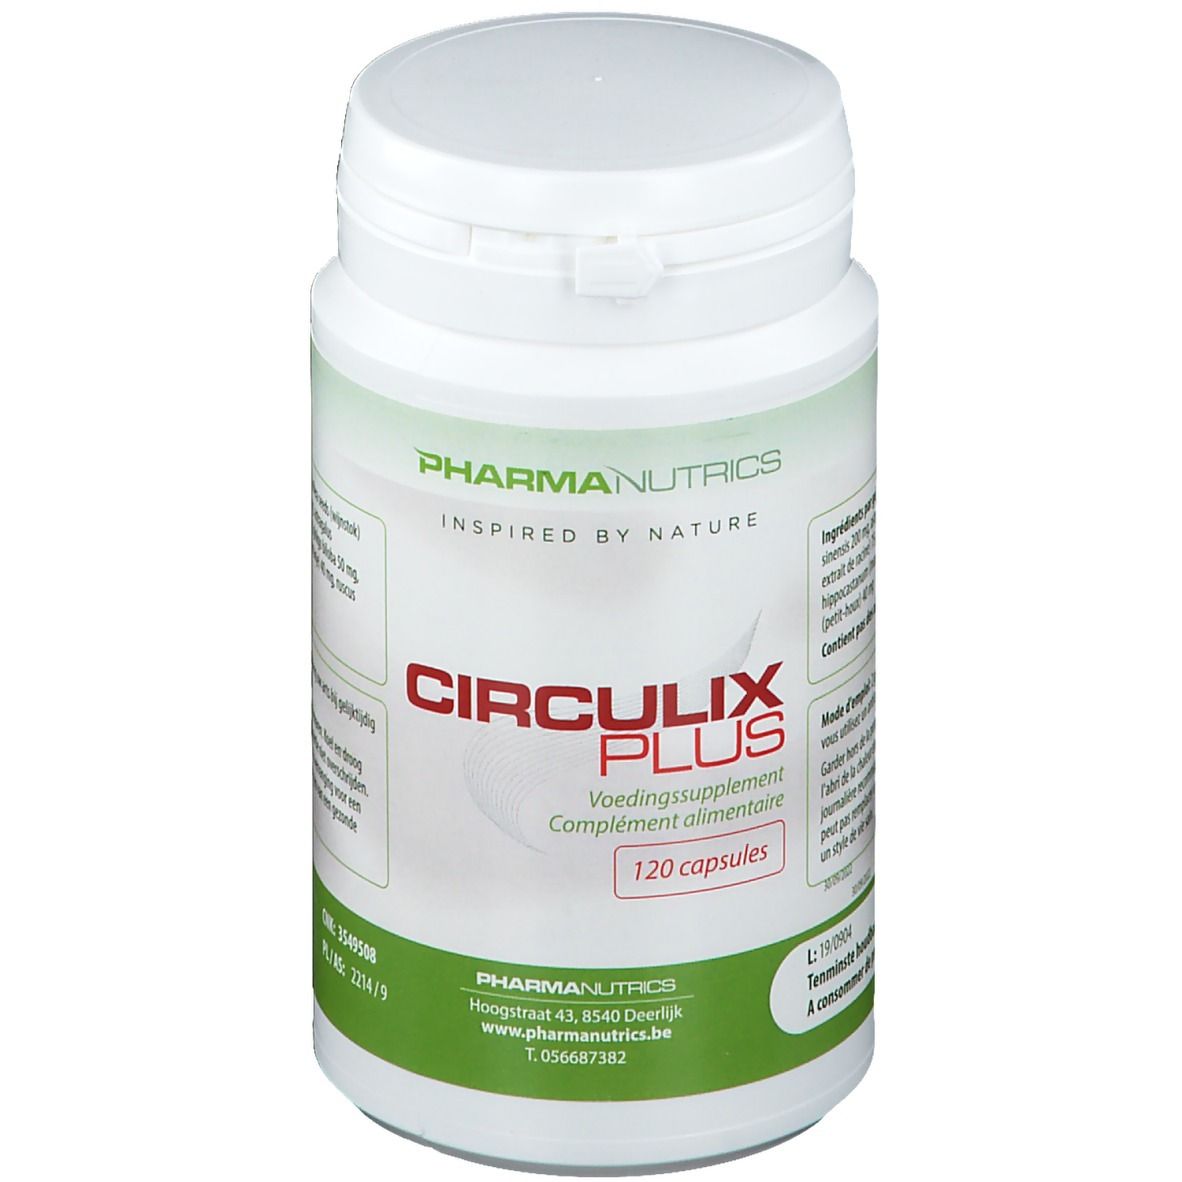 PharmaNutrics Circulix Plus